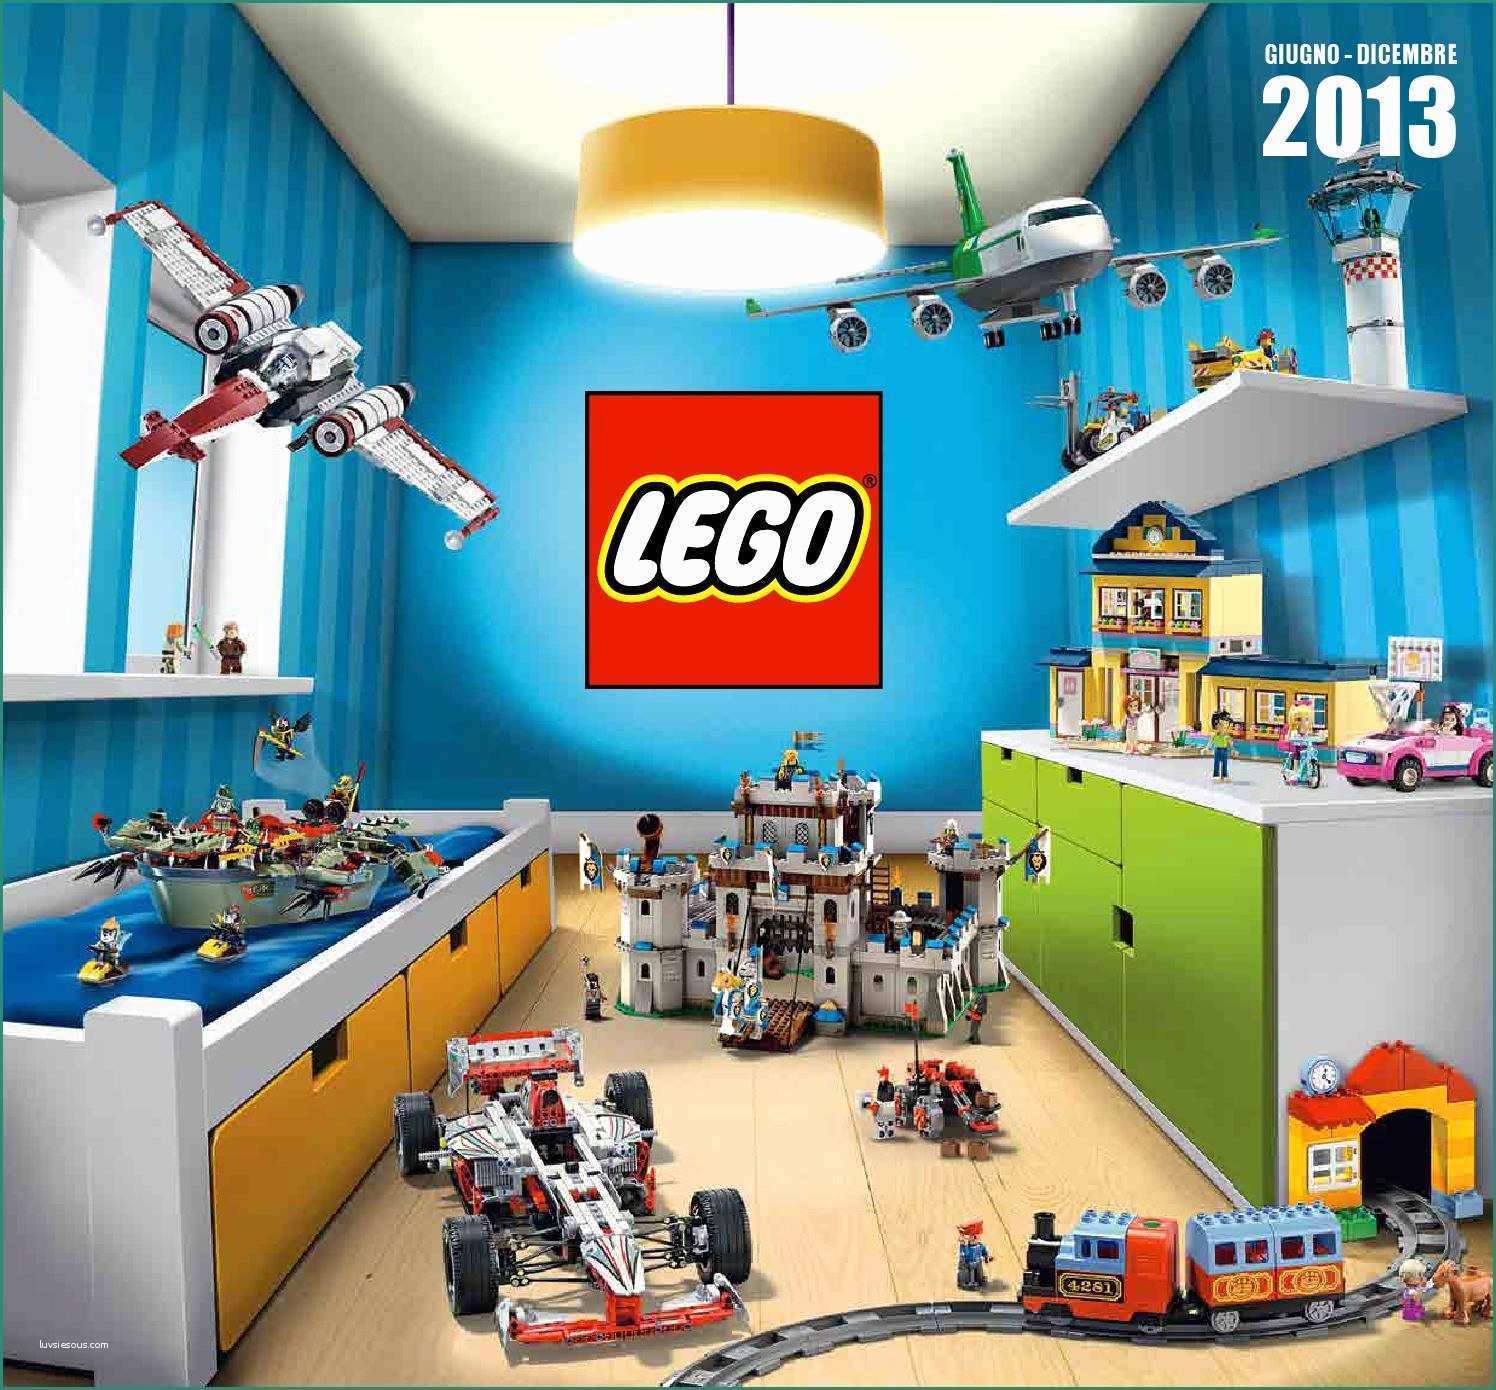 Costruire Un Camper Da Un Furgone E Lego Catalog It 2013 2 by Fabbbbbricksâ¢ issuu